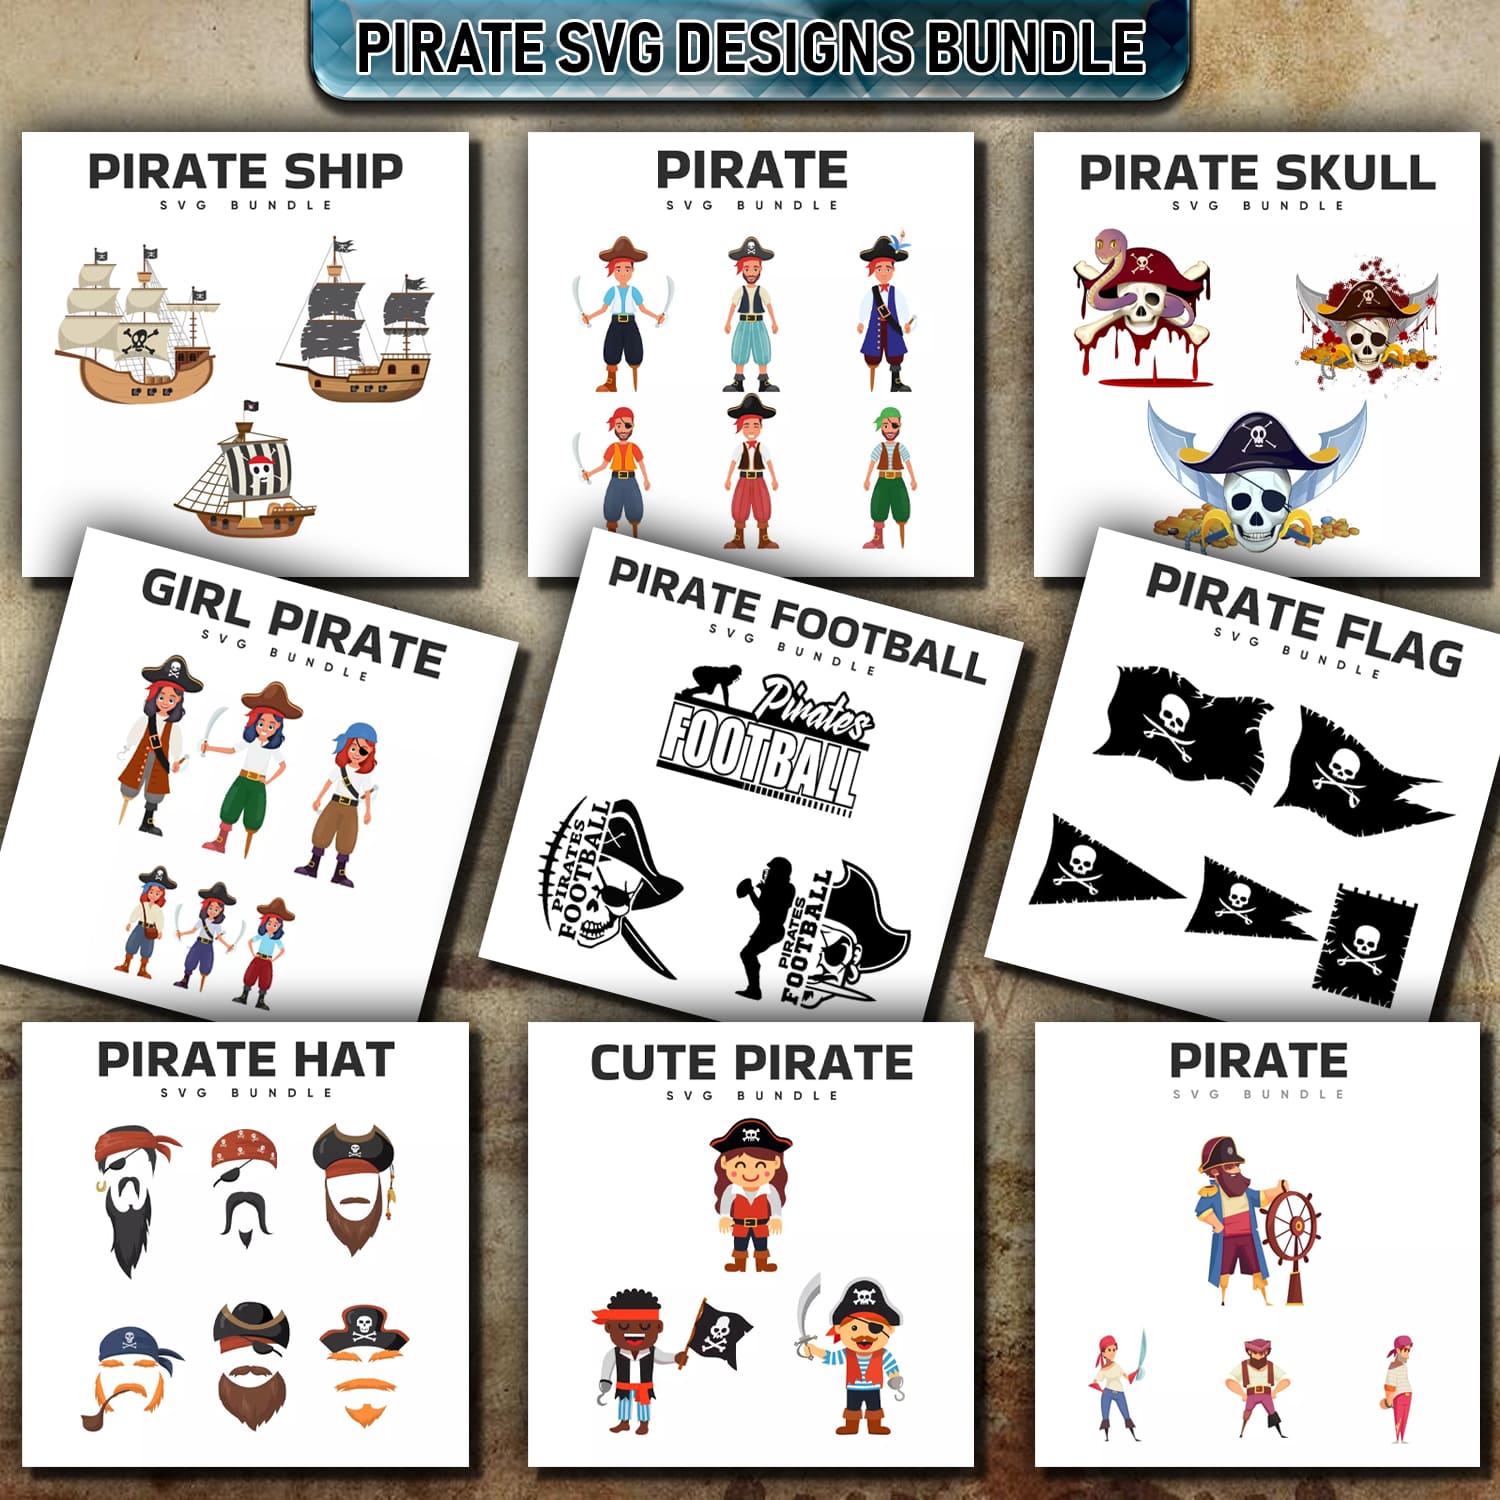 Pirate SVG Designs Bundle cover image.